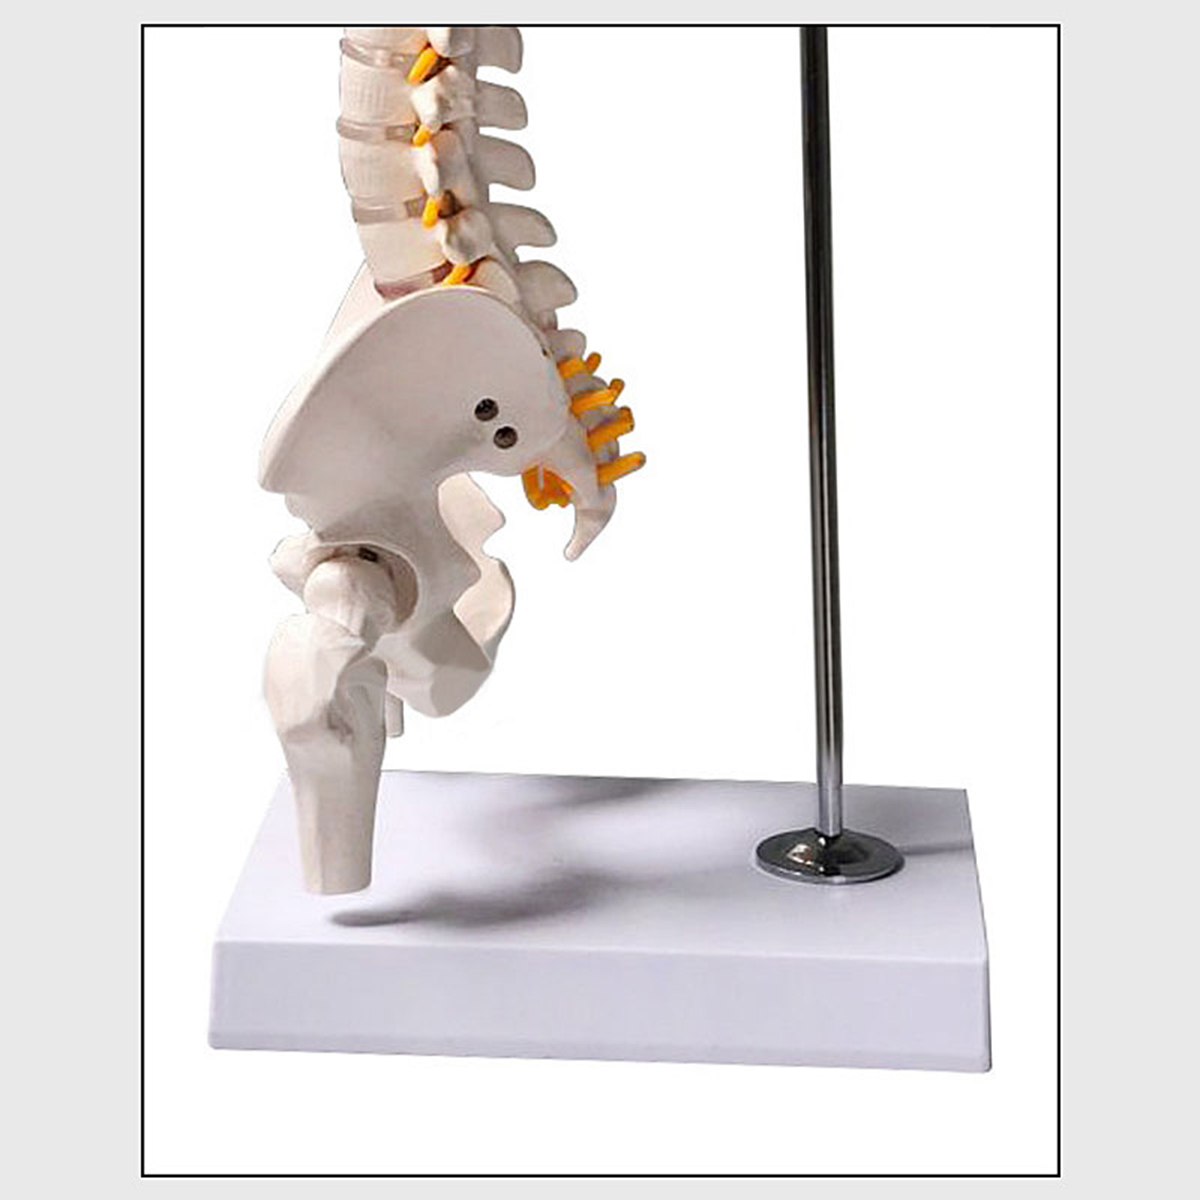 45cm-177quot-Spine-Medical-Model-With-Pelvis-Femur-Heads-12-Life-Lab-Equipment-1620821-10